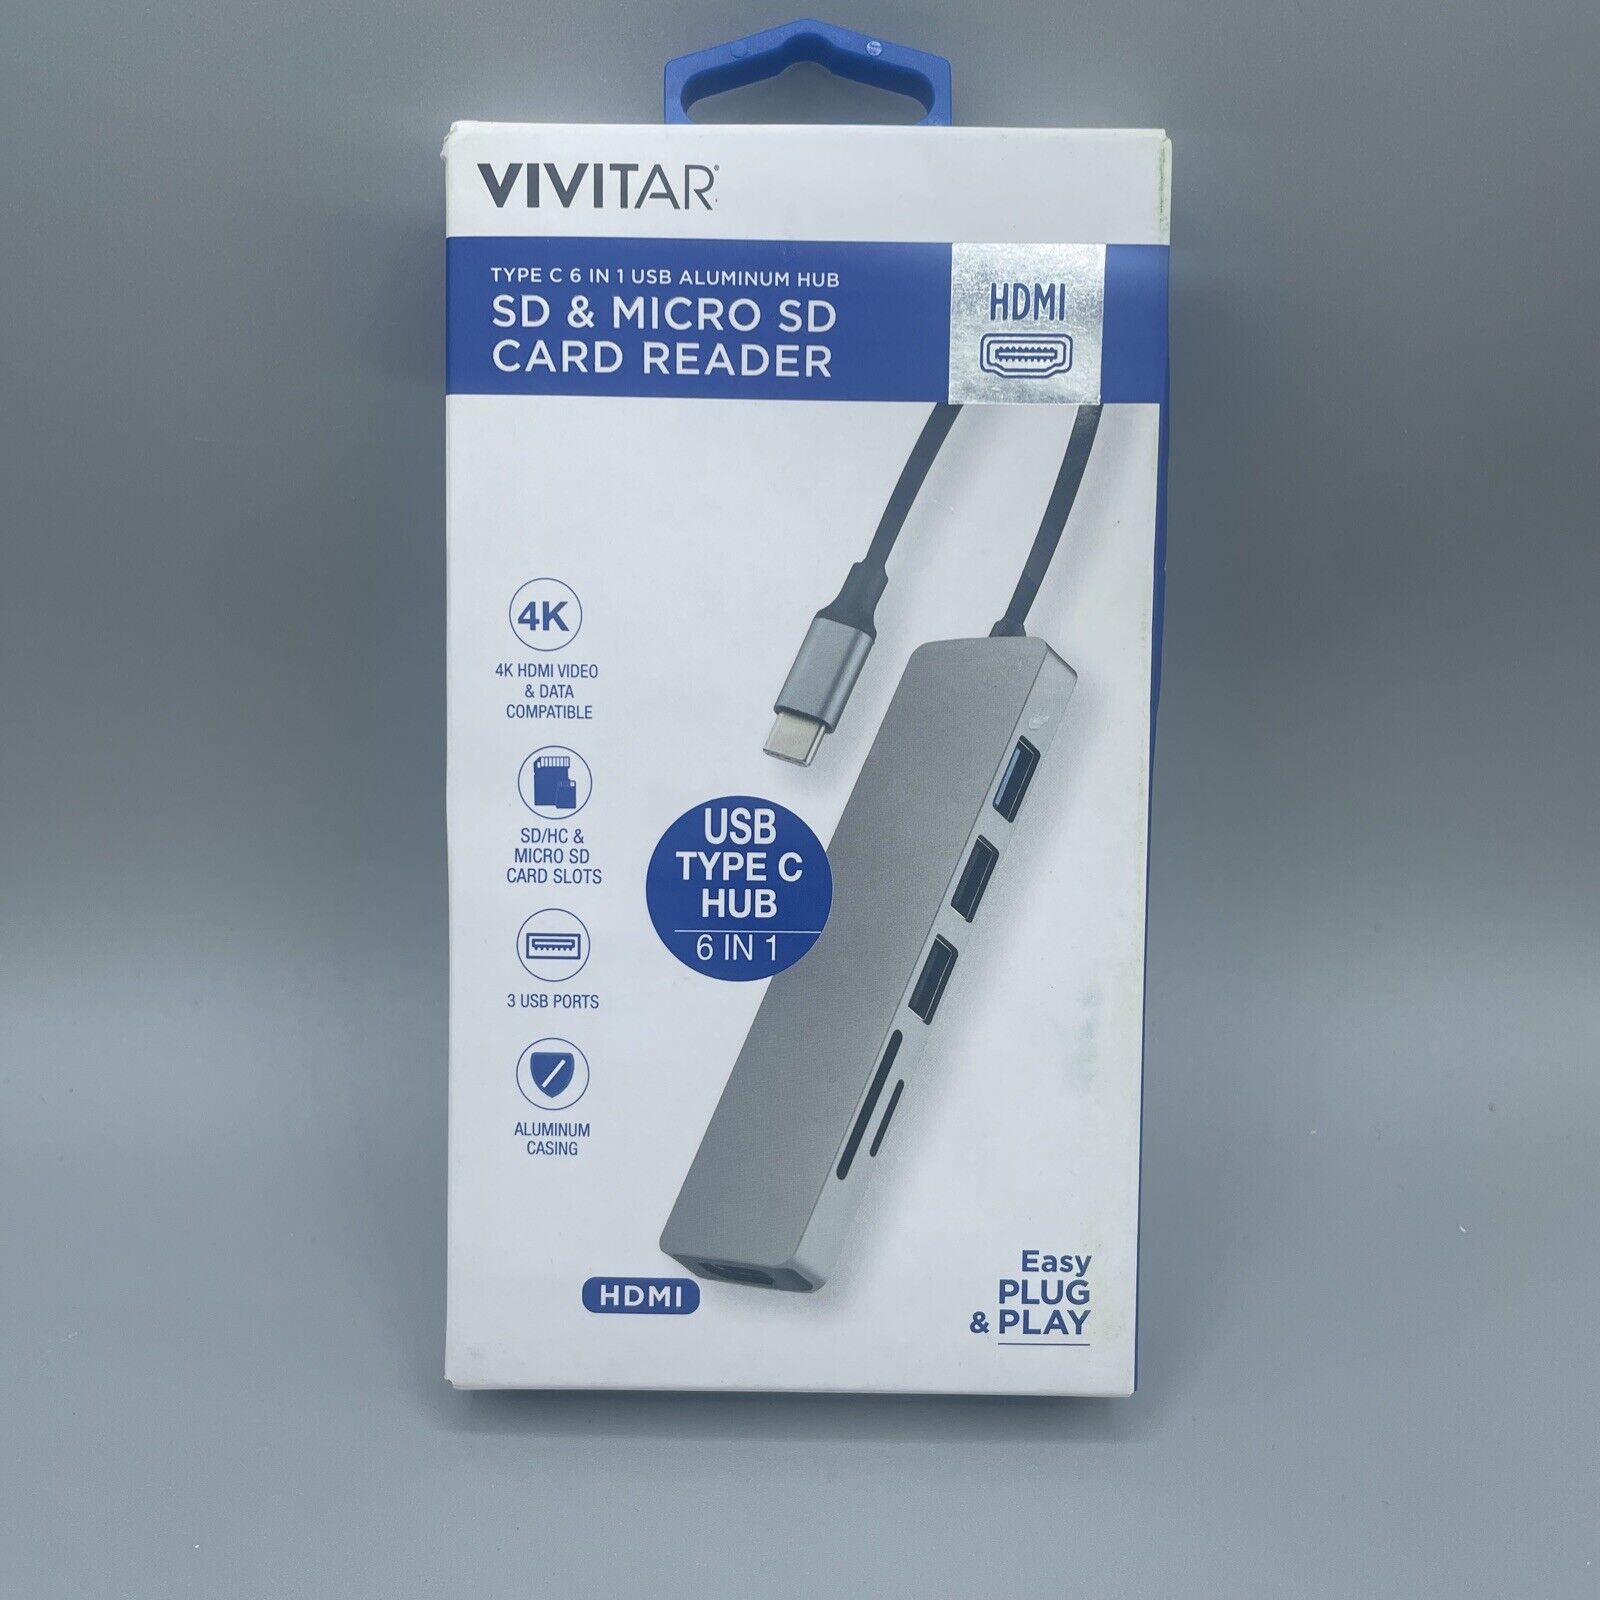 Vivitar Aluminum USB Type C Hub 6 In 1 SD & Micro SD Card Reader Plug & Play